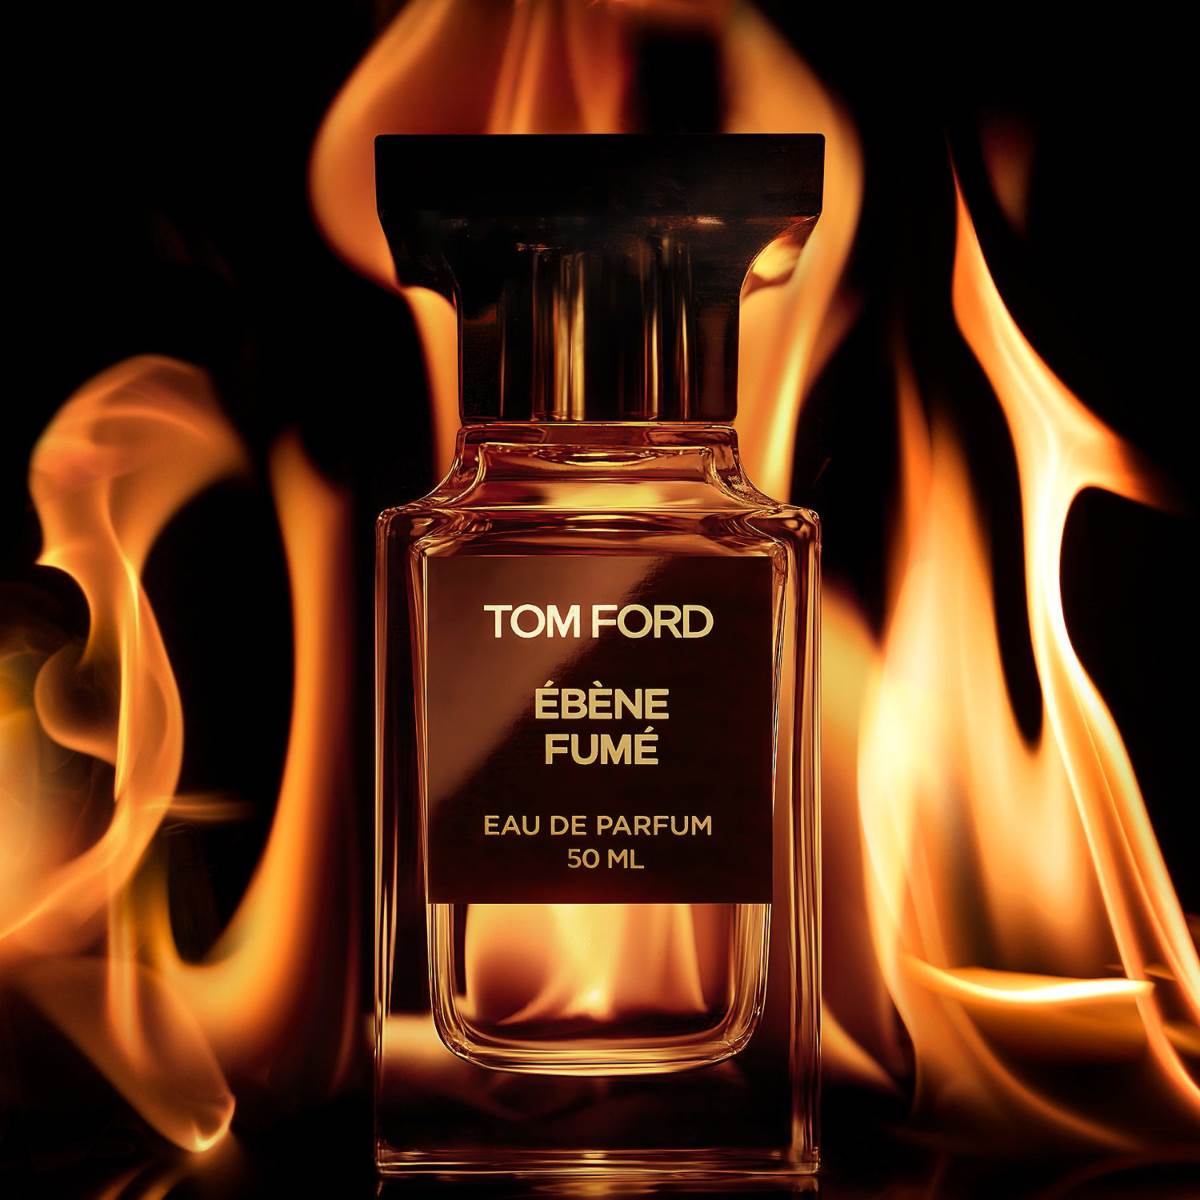 Tom Ford je izbacio novi parfem iz Private Blend kolekcije pod nazivom Ébène Fumé.